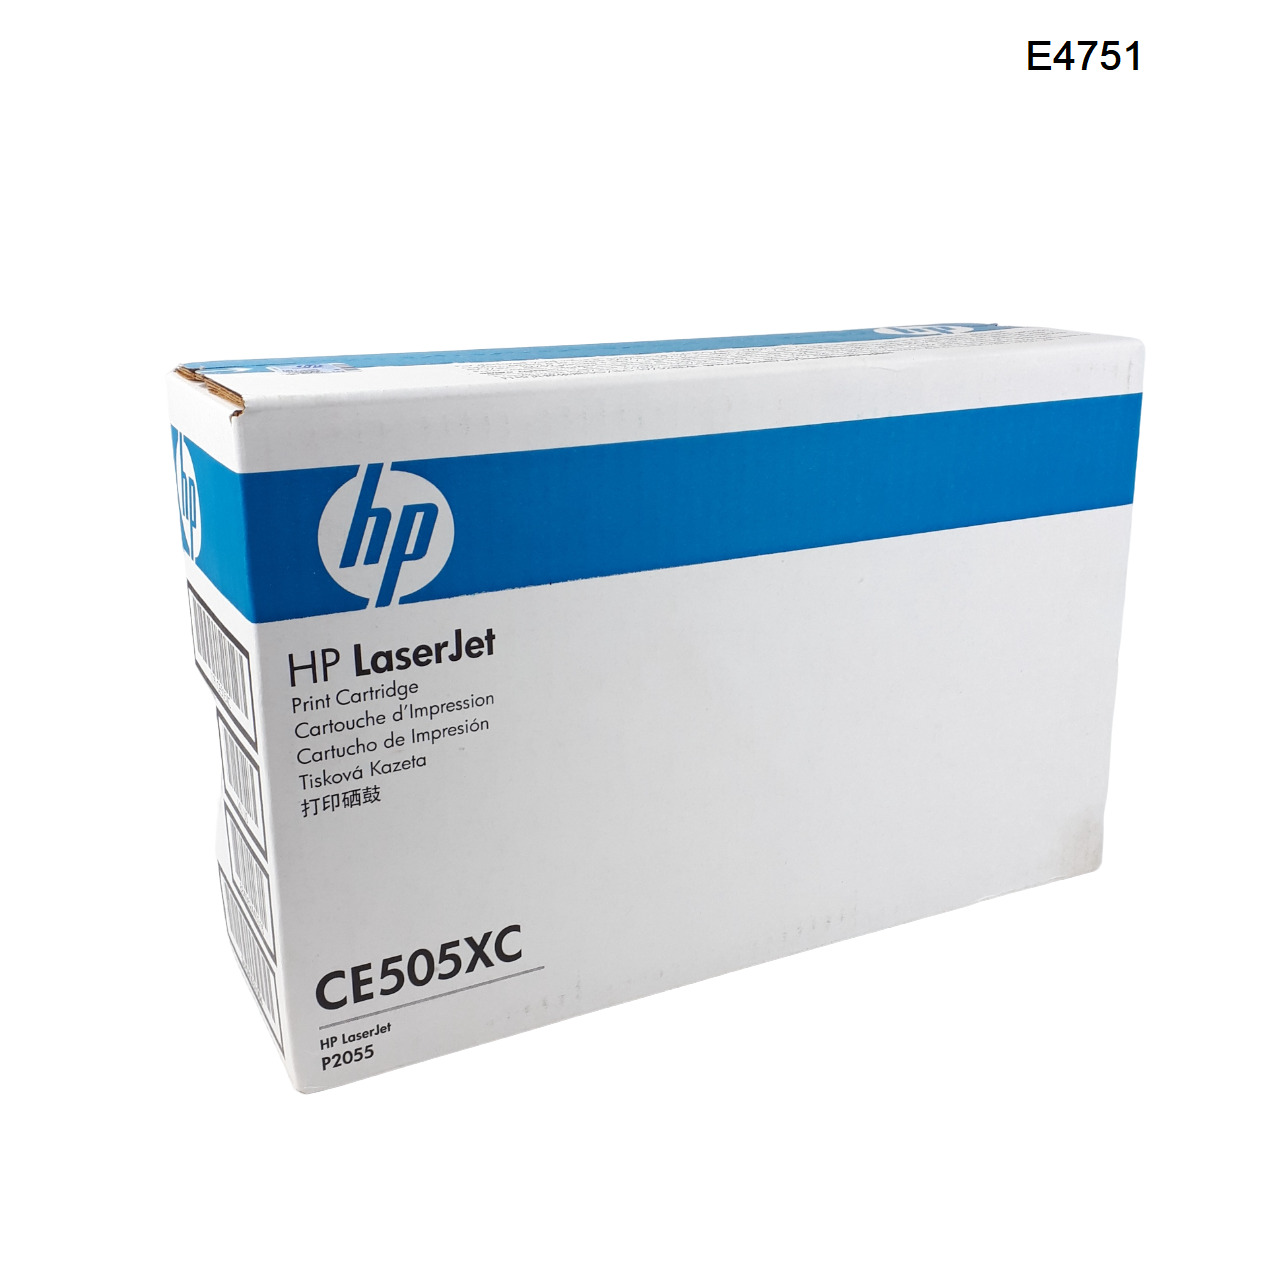 Genuine HP CE505XC OEM Black Print Cartridge for LaserJet P2055 SEALED NEW E4751